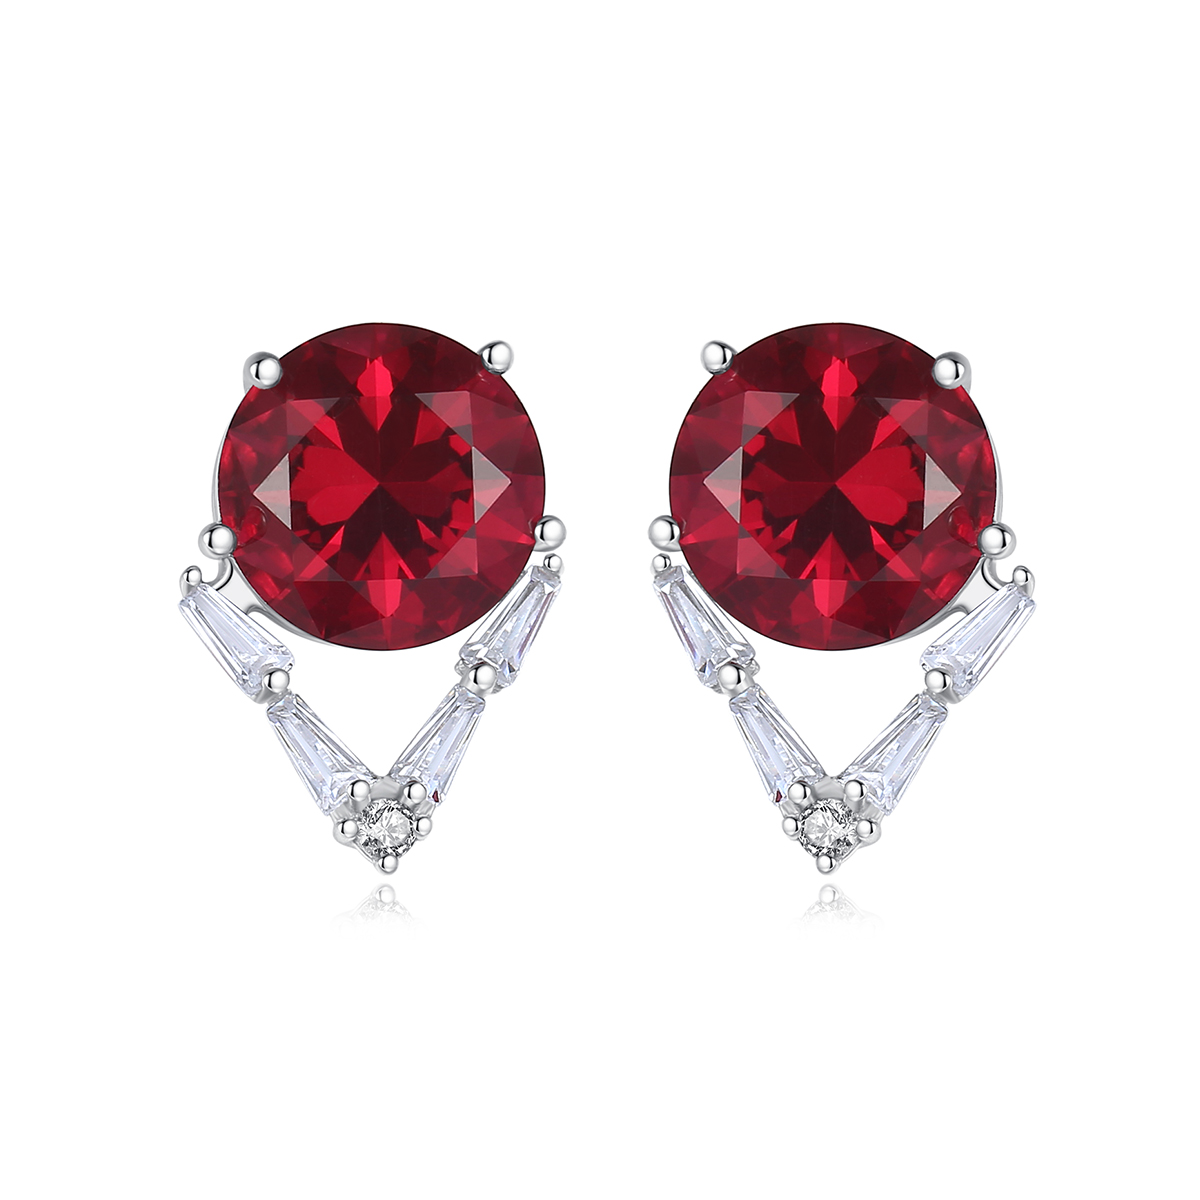 E-shop Linda's Jewelry Strieborné náušnice Red & Crystal Ag 925/1000 IN371